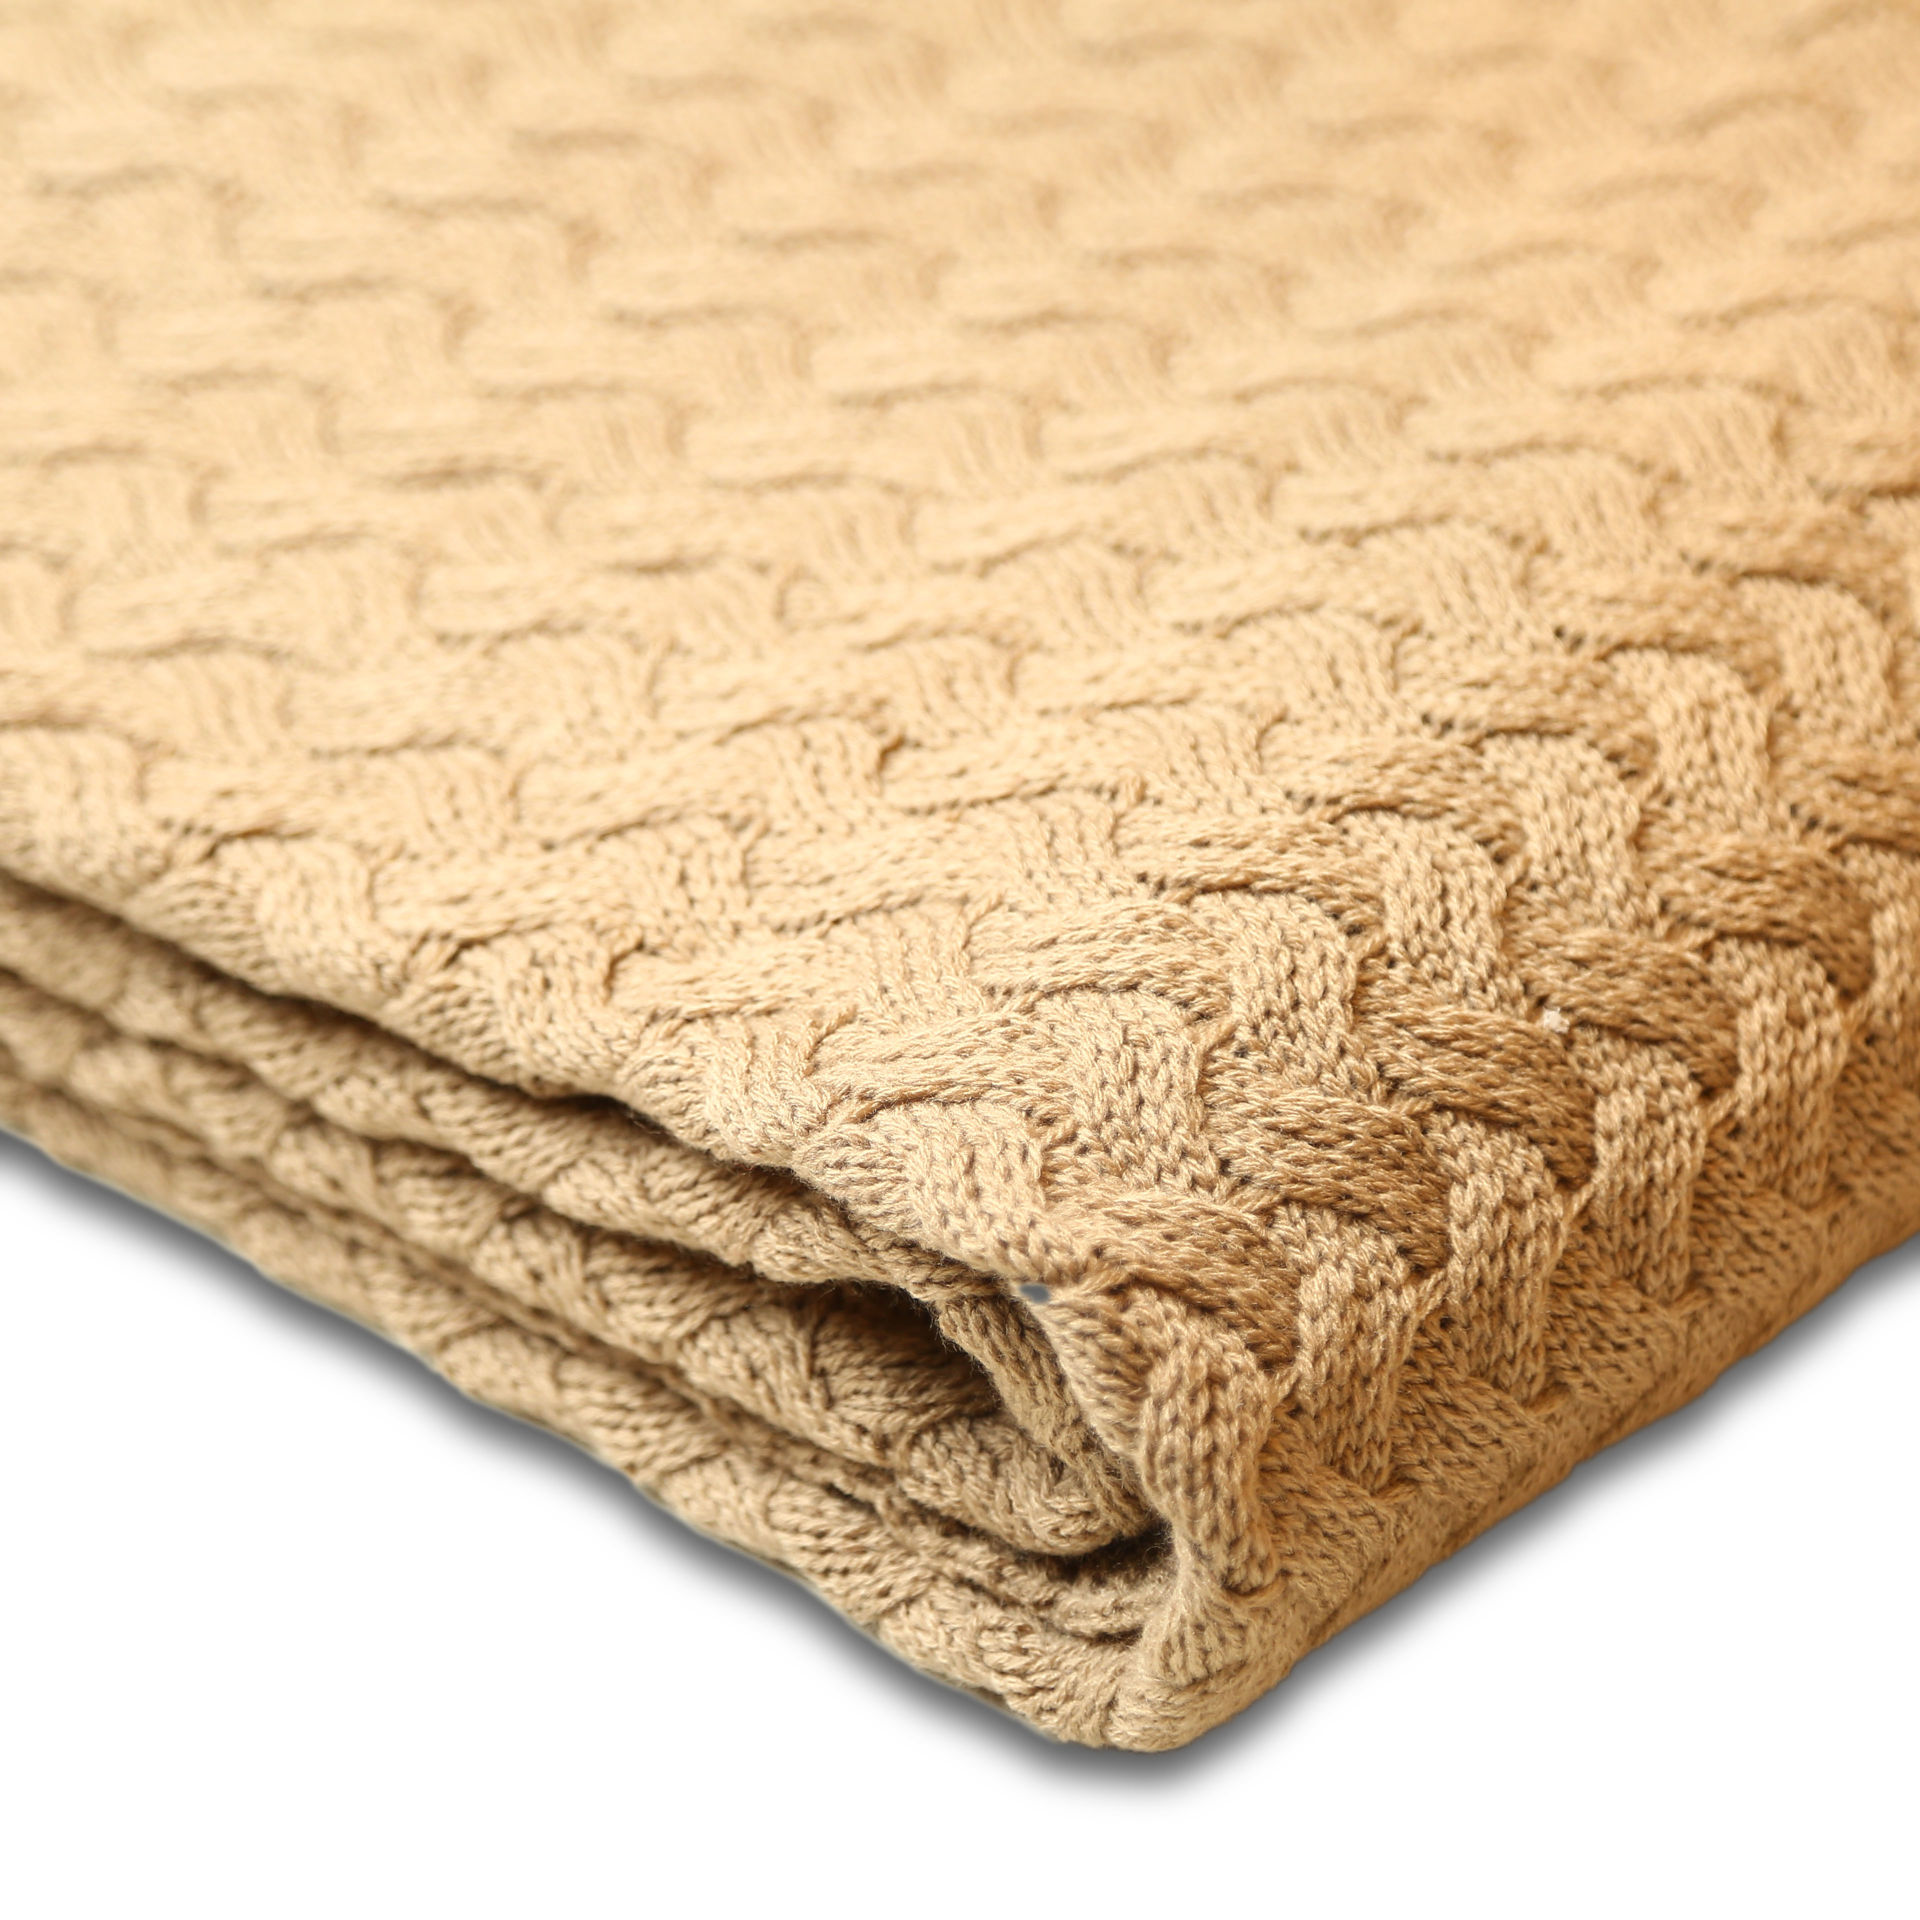 پتو بافت کازابل طرح کد 6 Casabel Texture Blanket single  code 6  Gulkorso